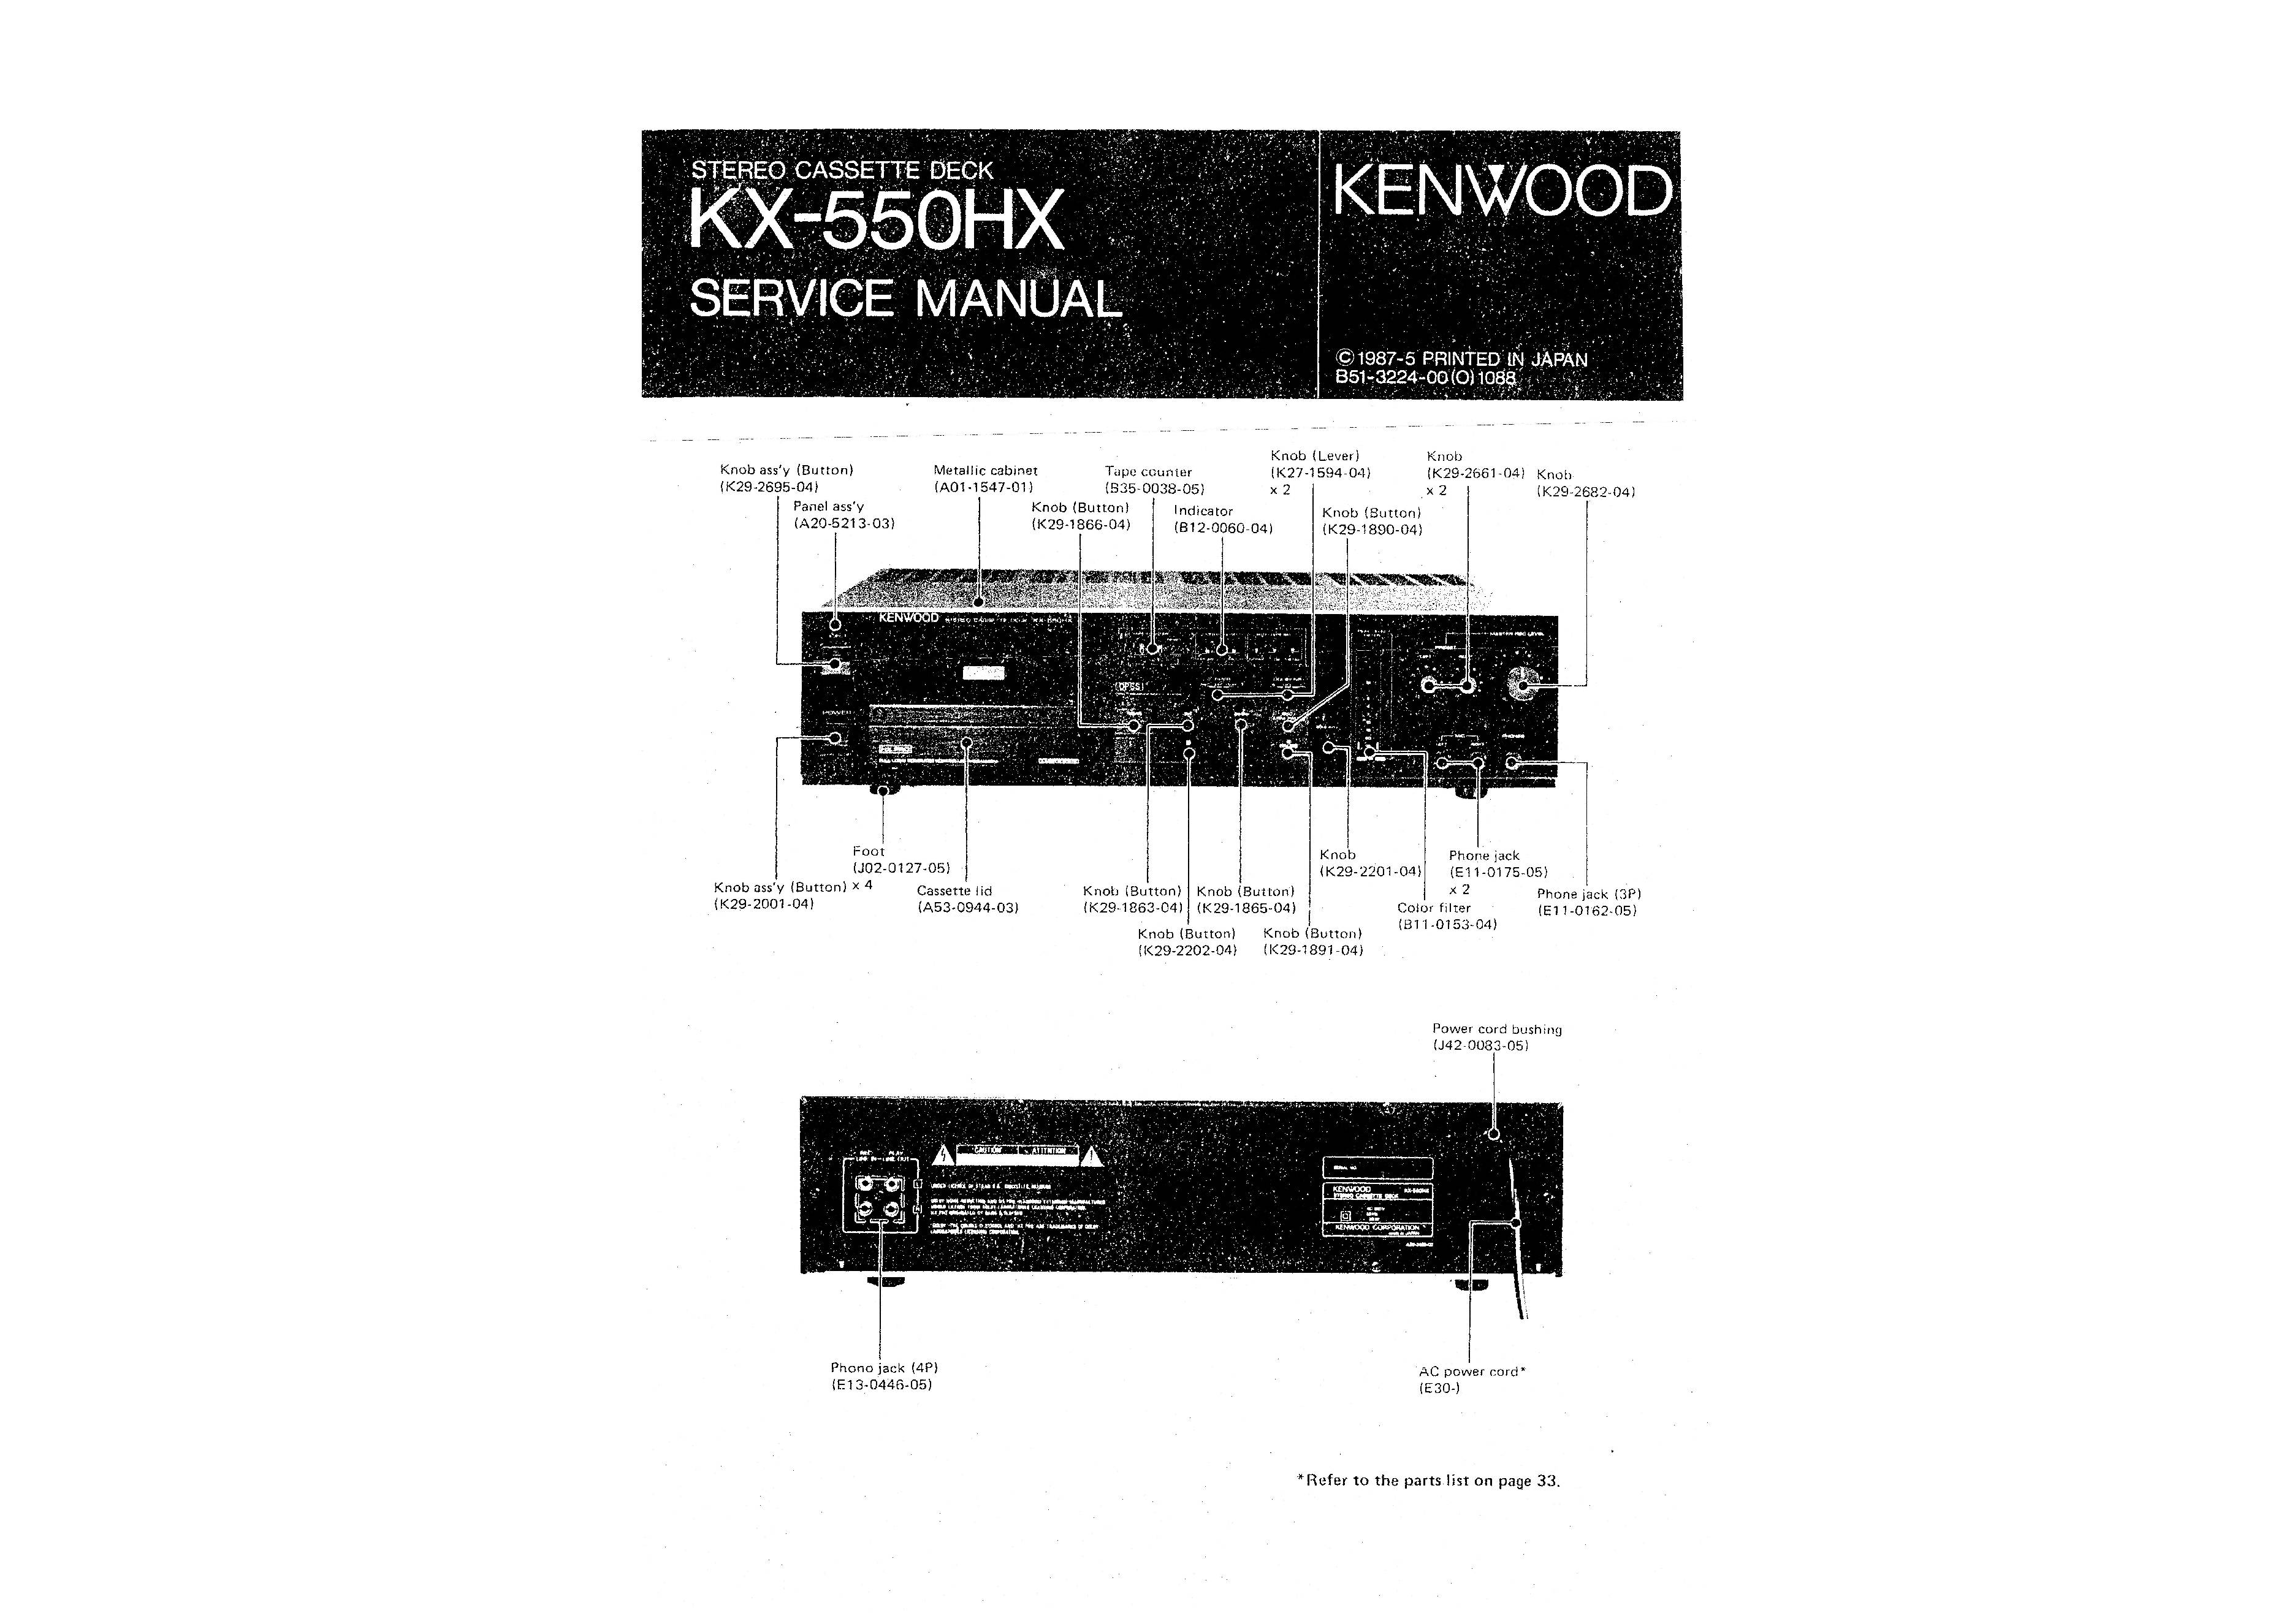 Kenwood KX-550HX